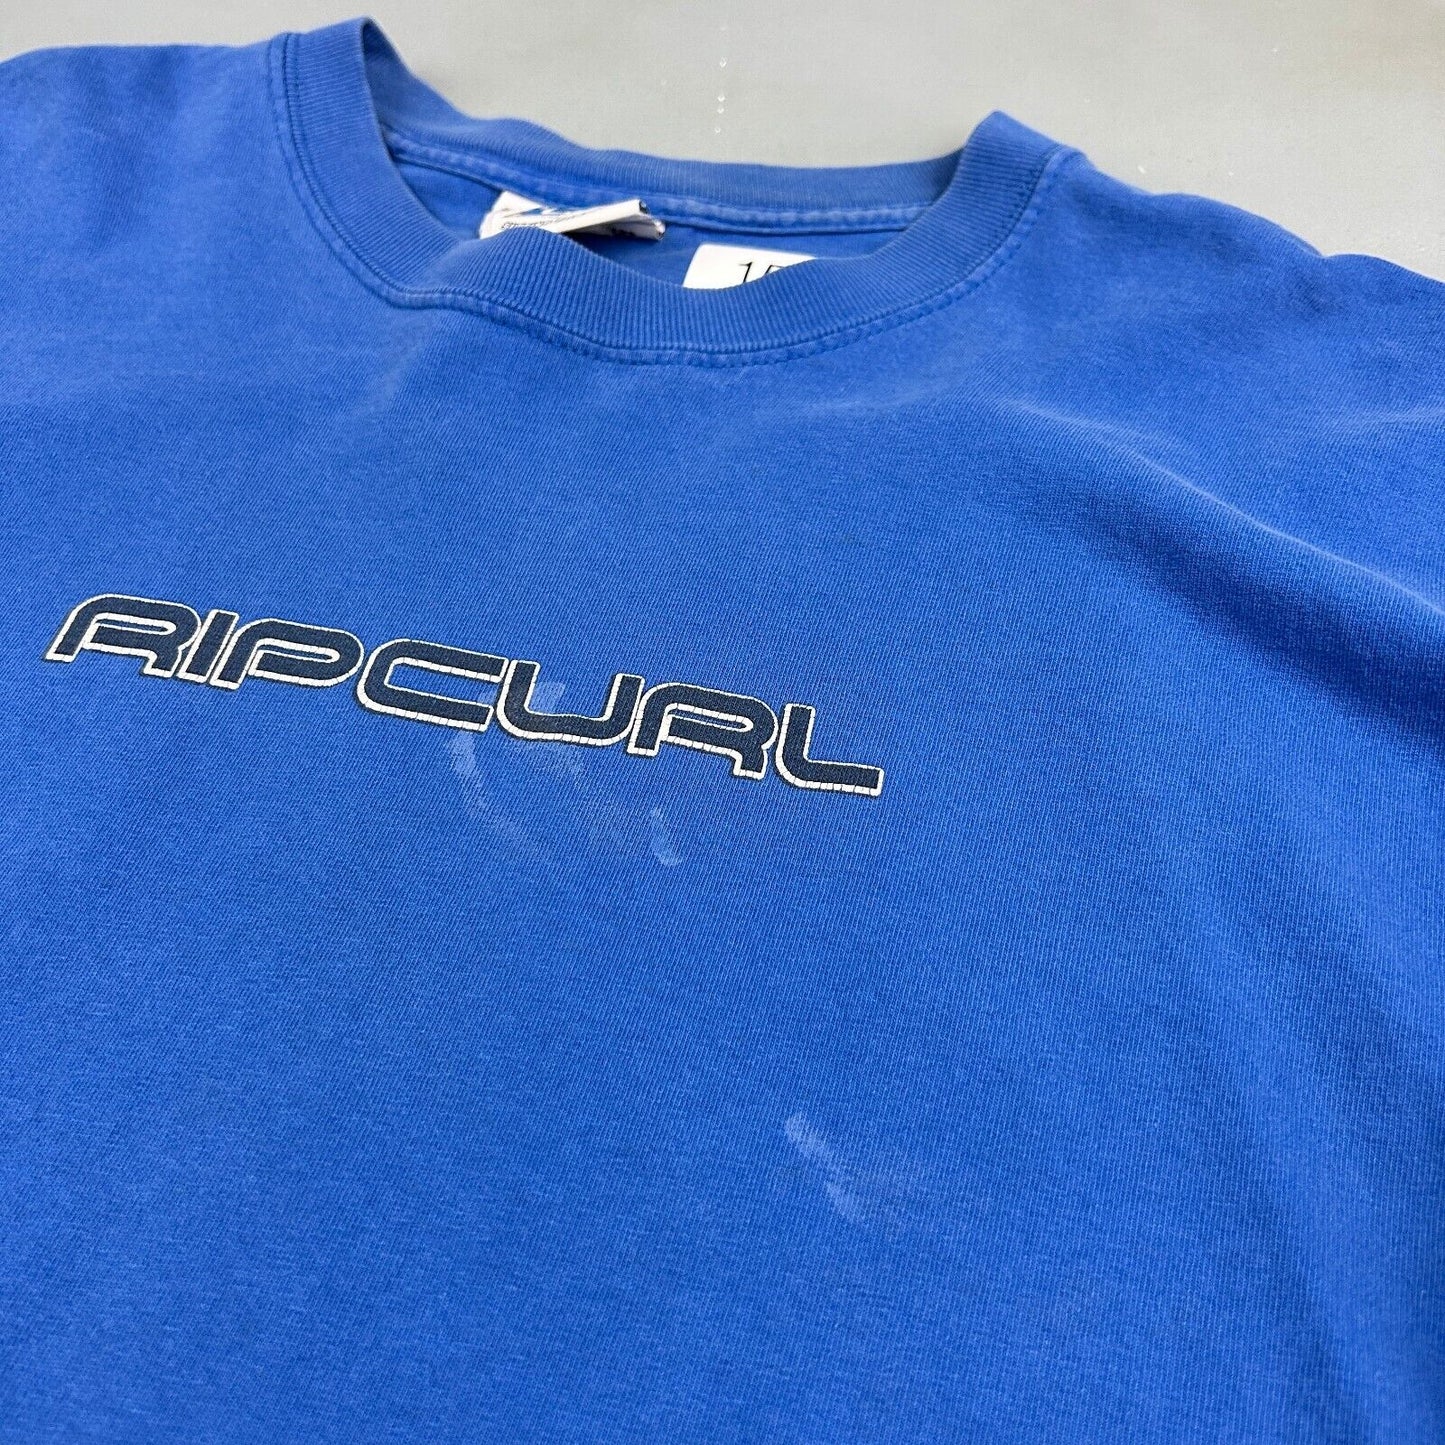 VINTAGE 90s | Rip Curl Surfing Company Blue T-Shirt sz XL Adult